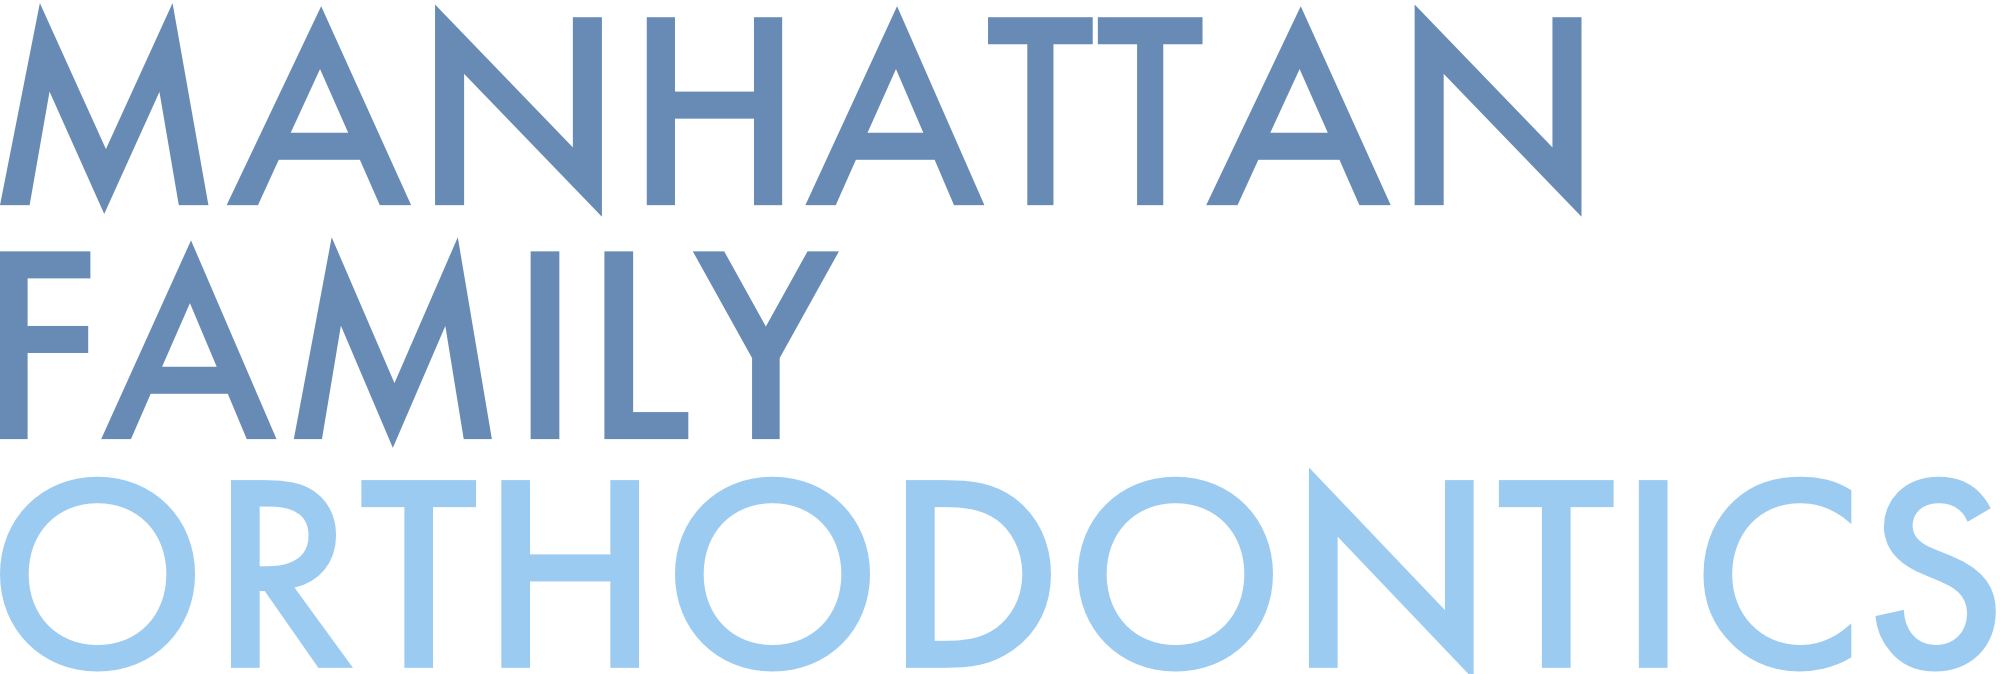 Manhattan Family Orthodontics logo